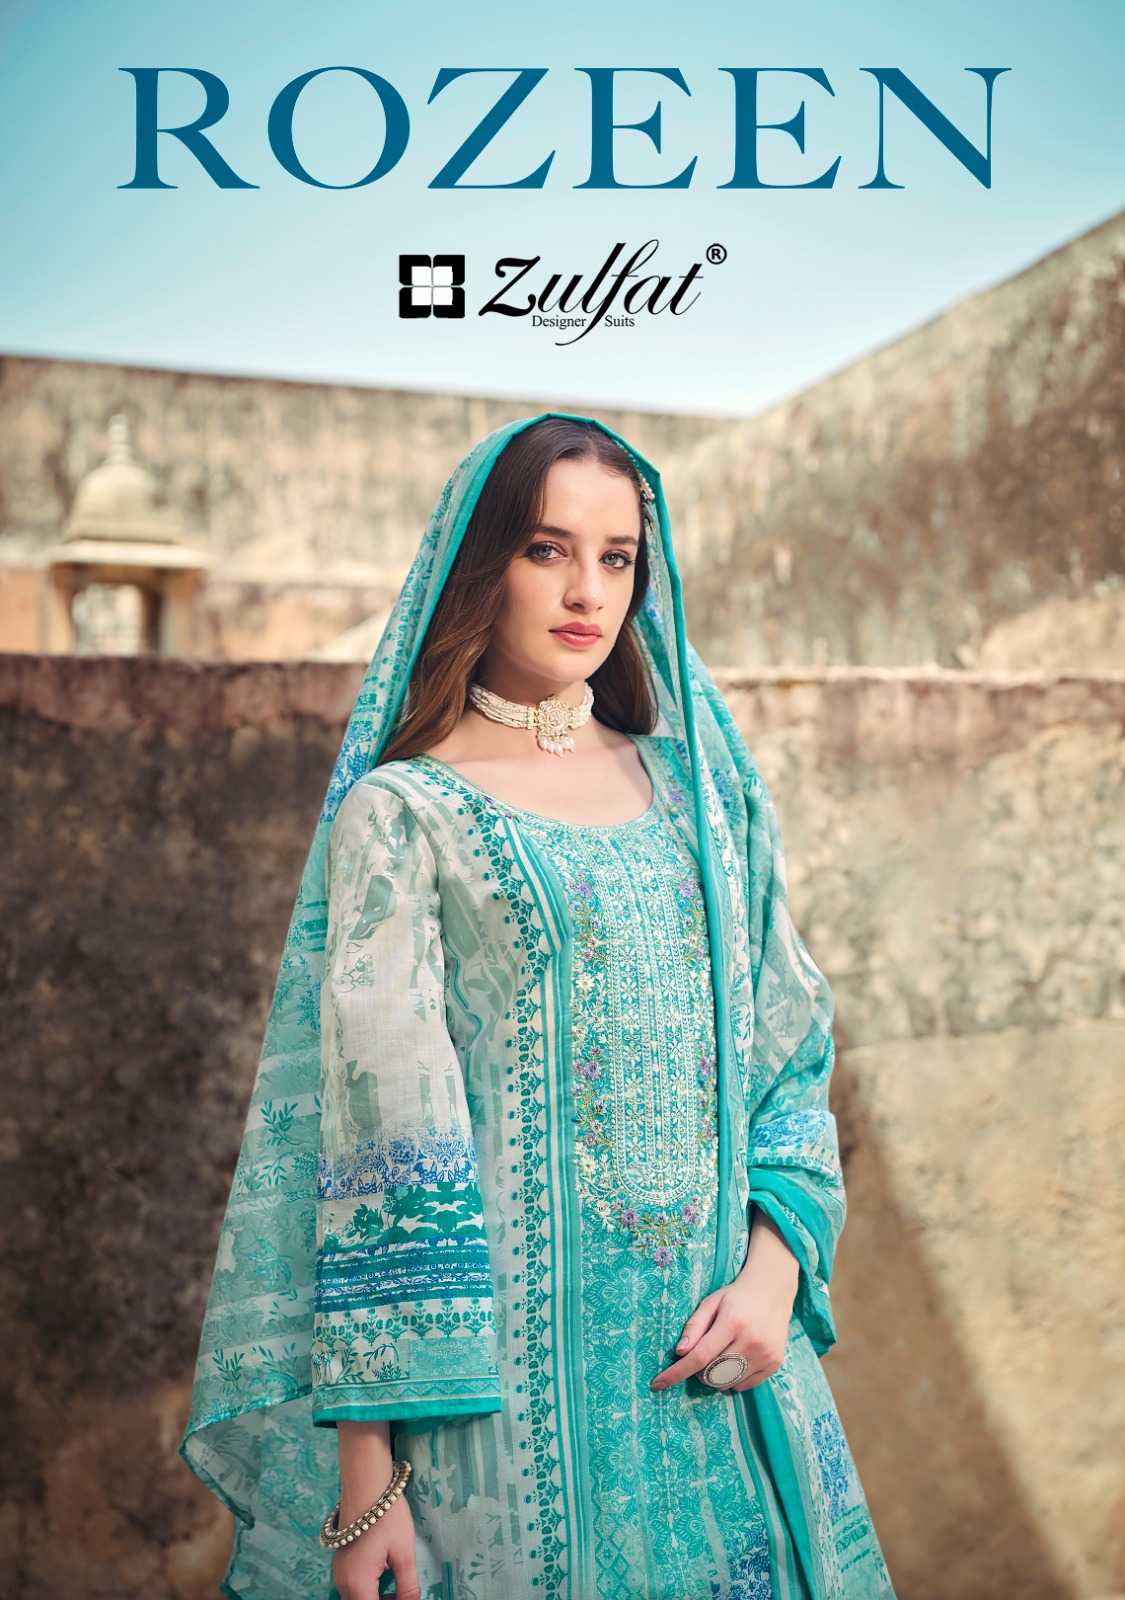 zulfat designer rozeen cotton exclusive designer pakistani concept salwar kameez material